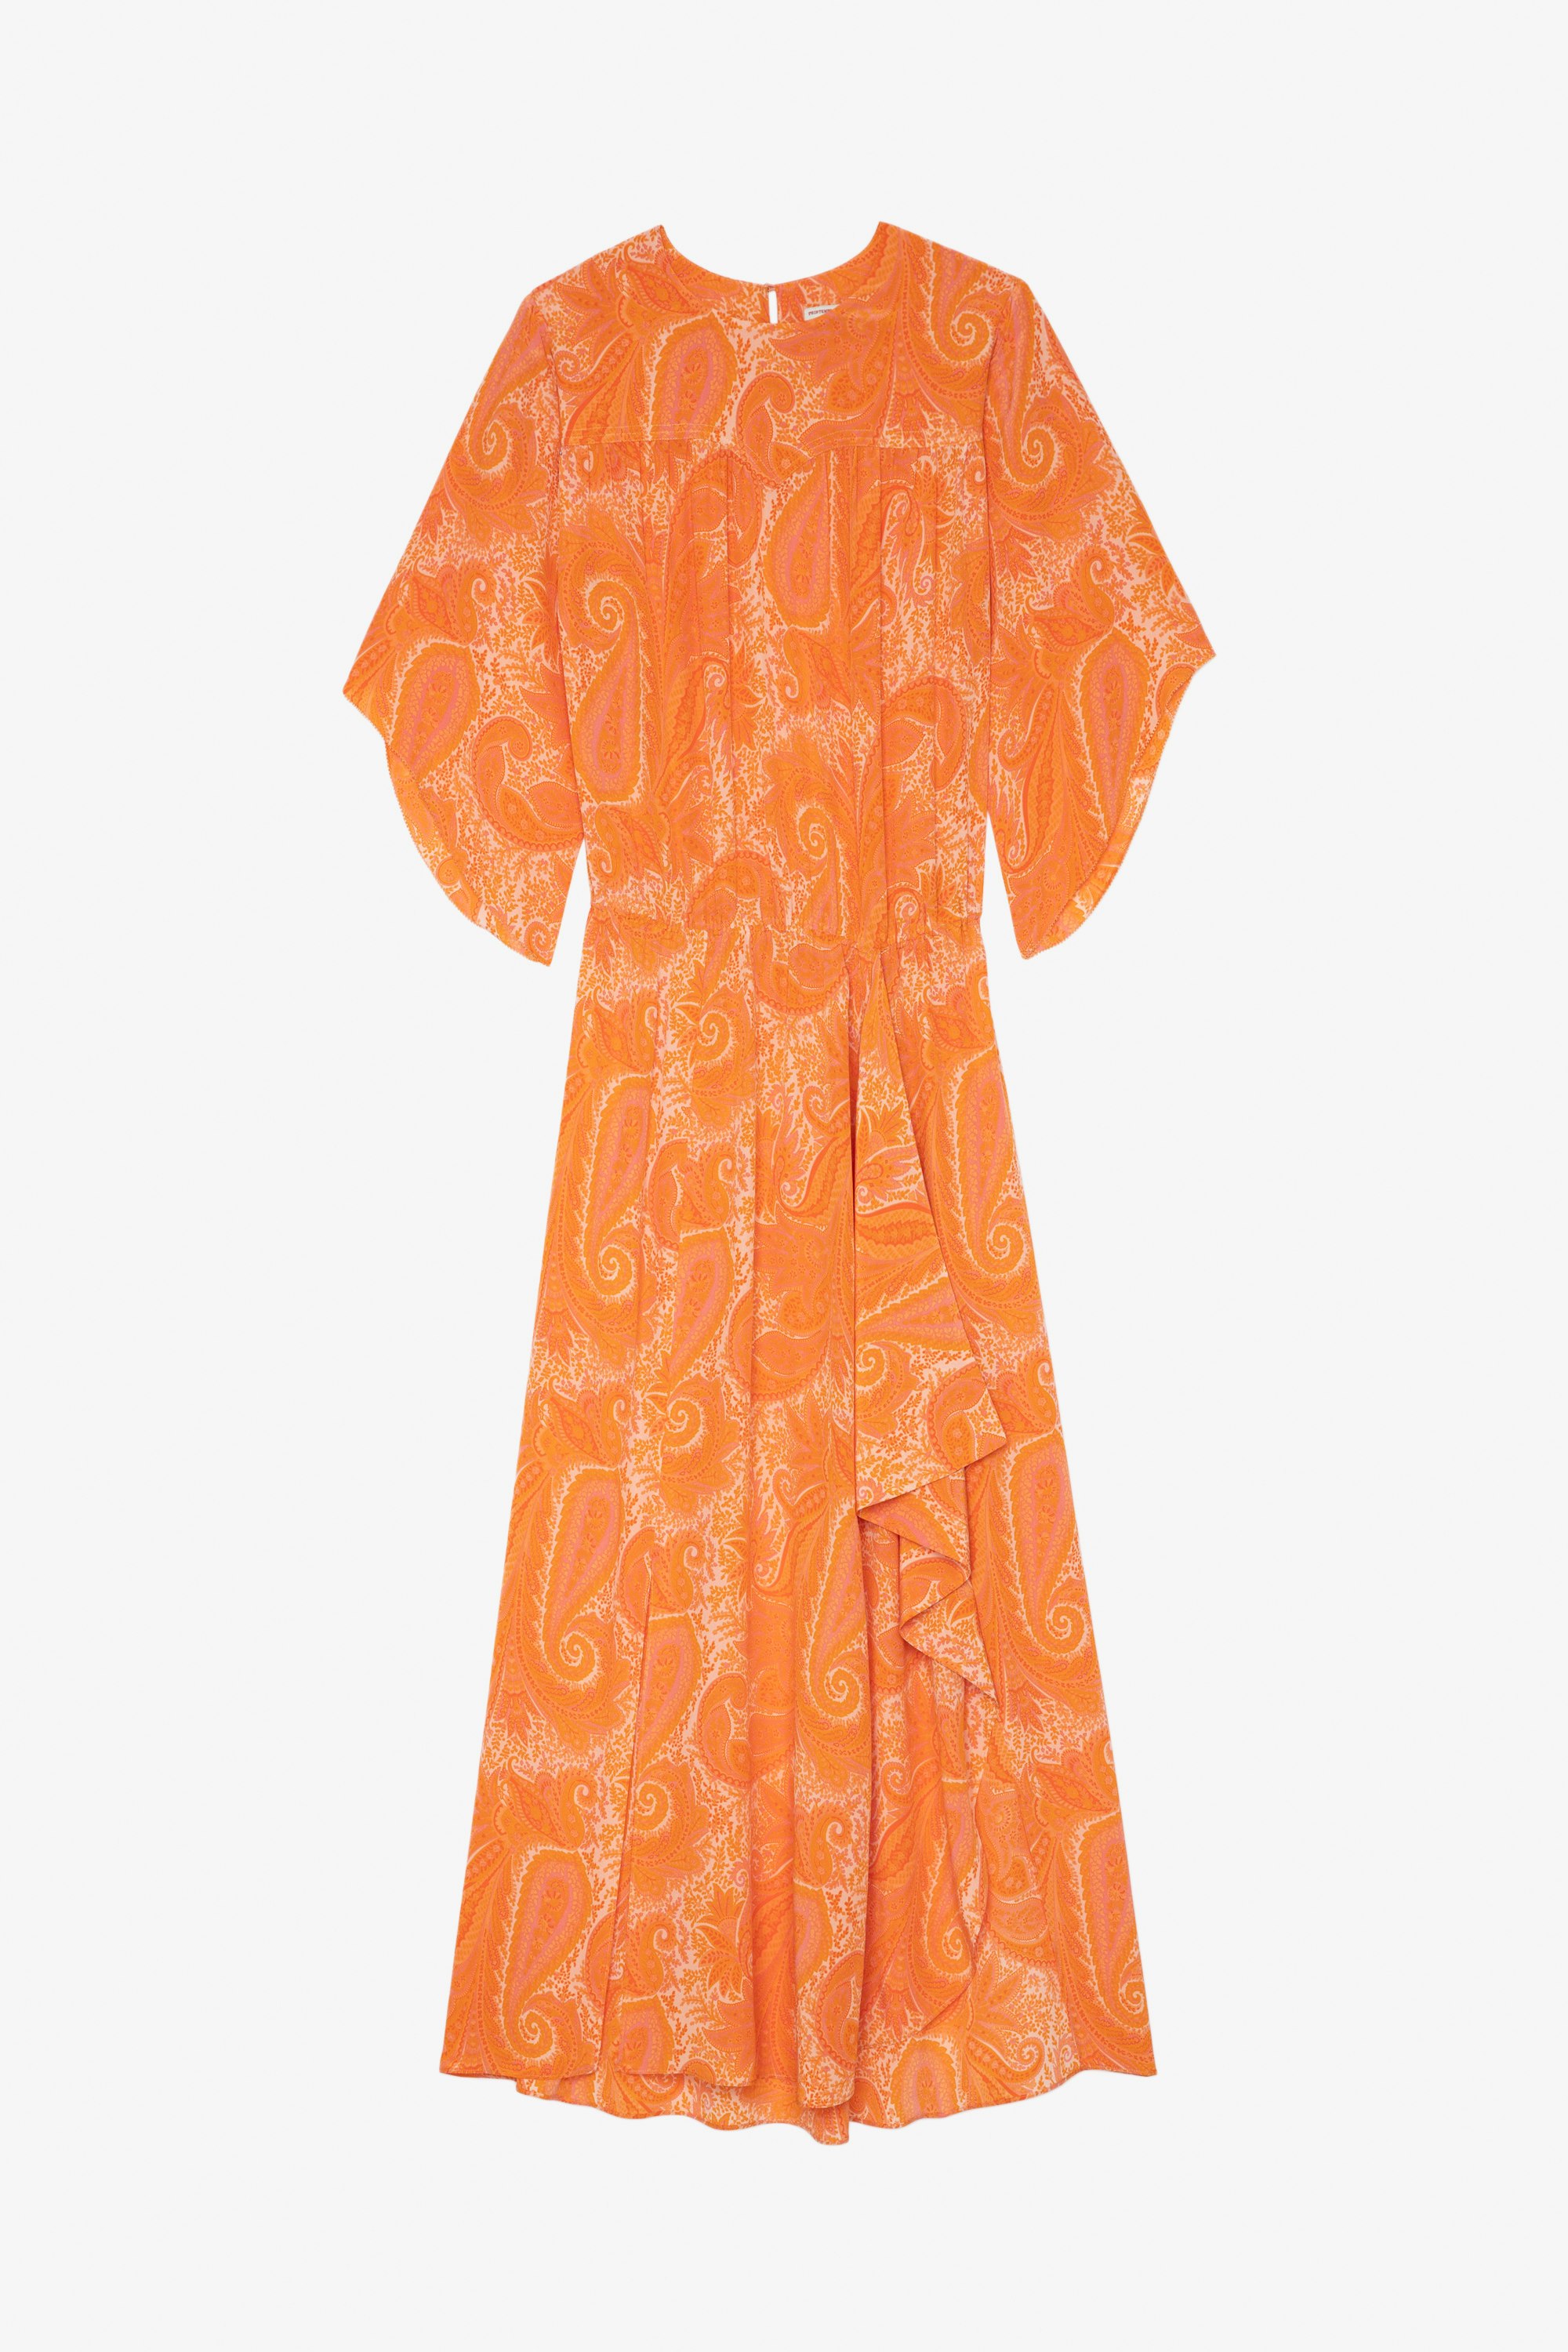 Rusty Dress Women’s long orange paisley-print silk dress in a draped asymmetric style with a belt